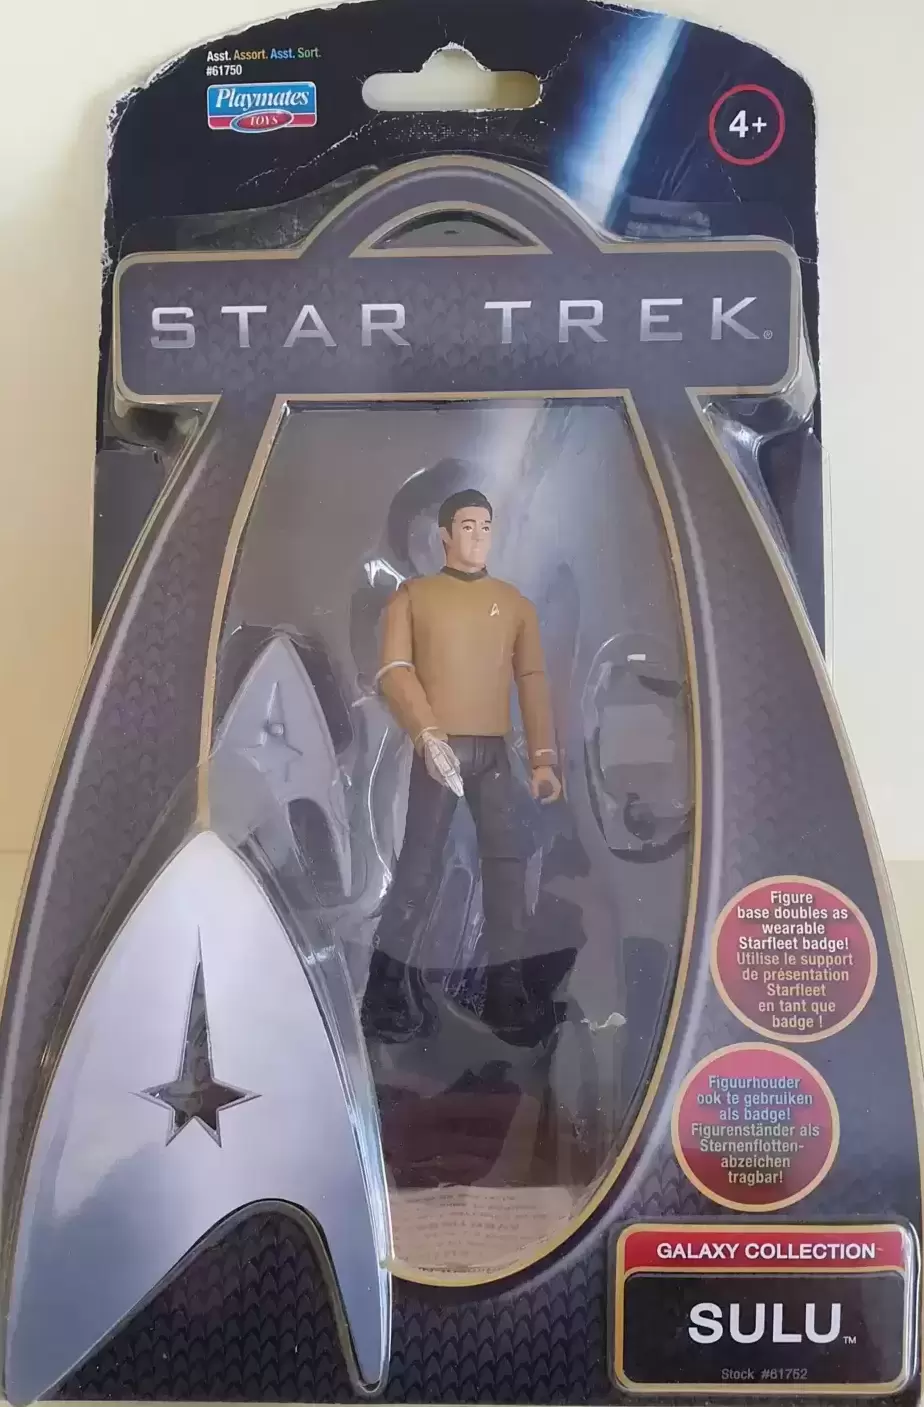 Star Trek - Galaxy Collection - Sulu